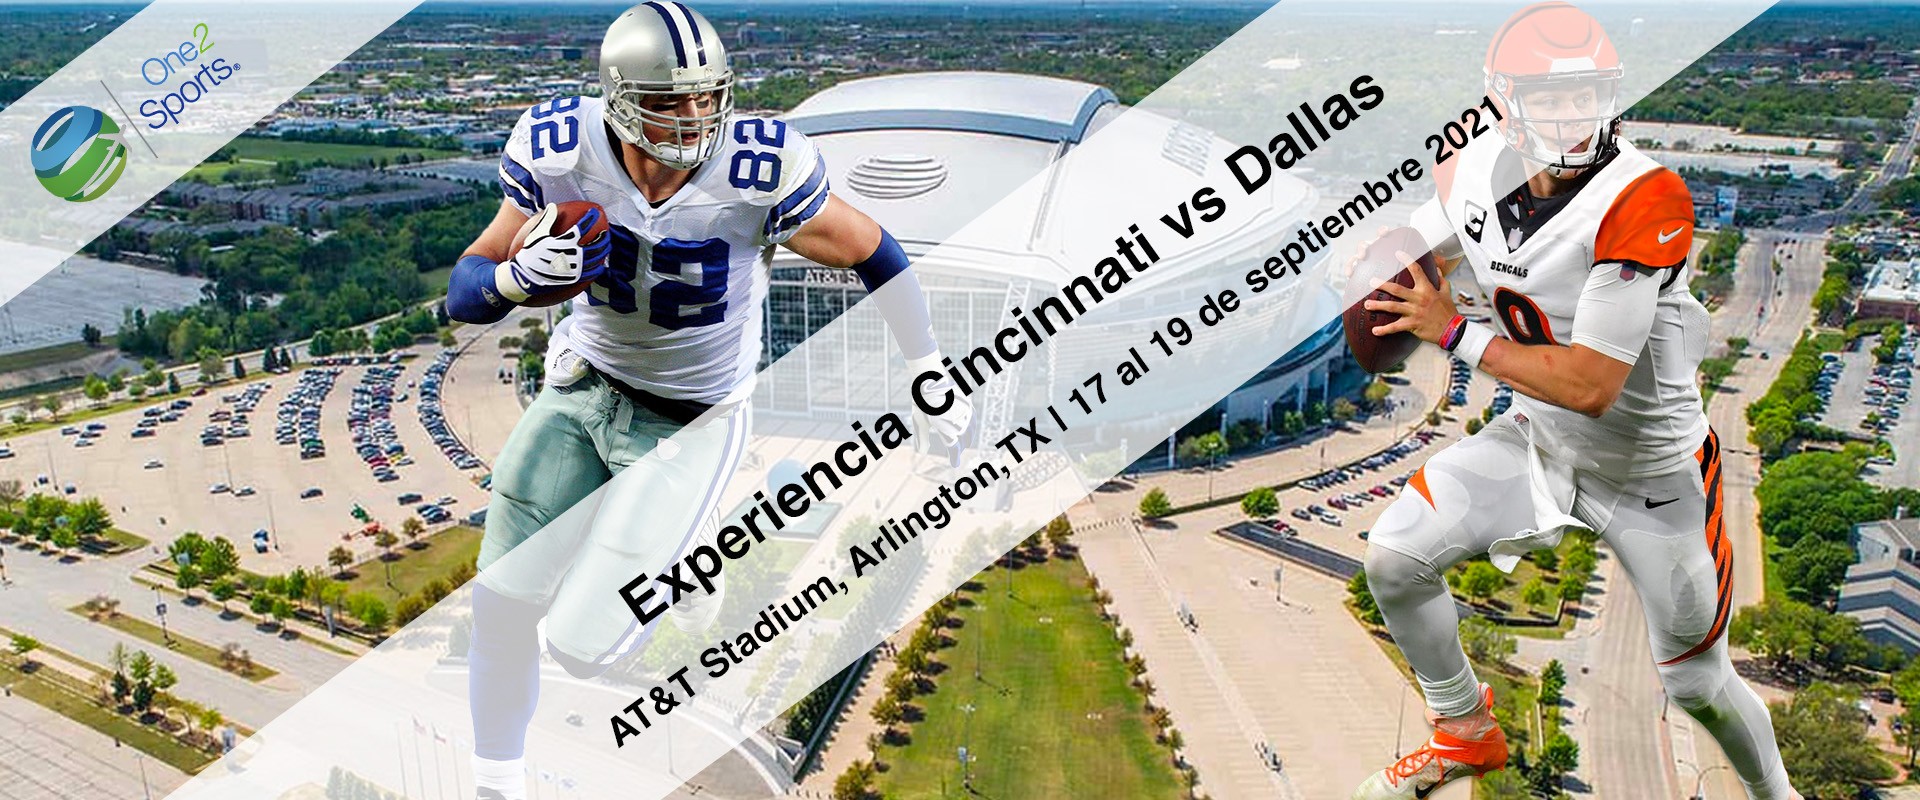 Dallas vs Cincinnati